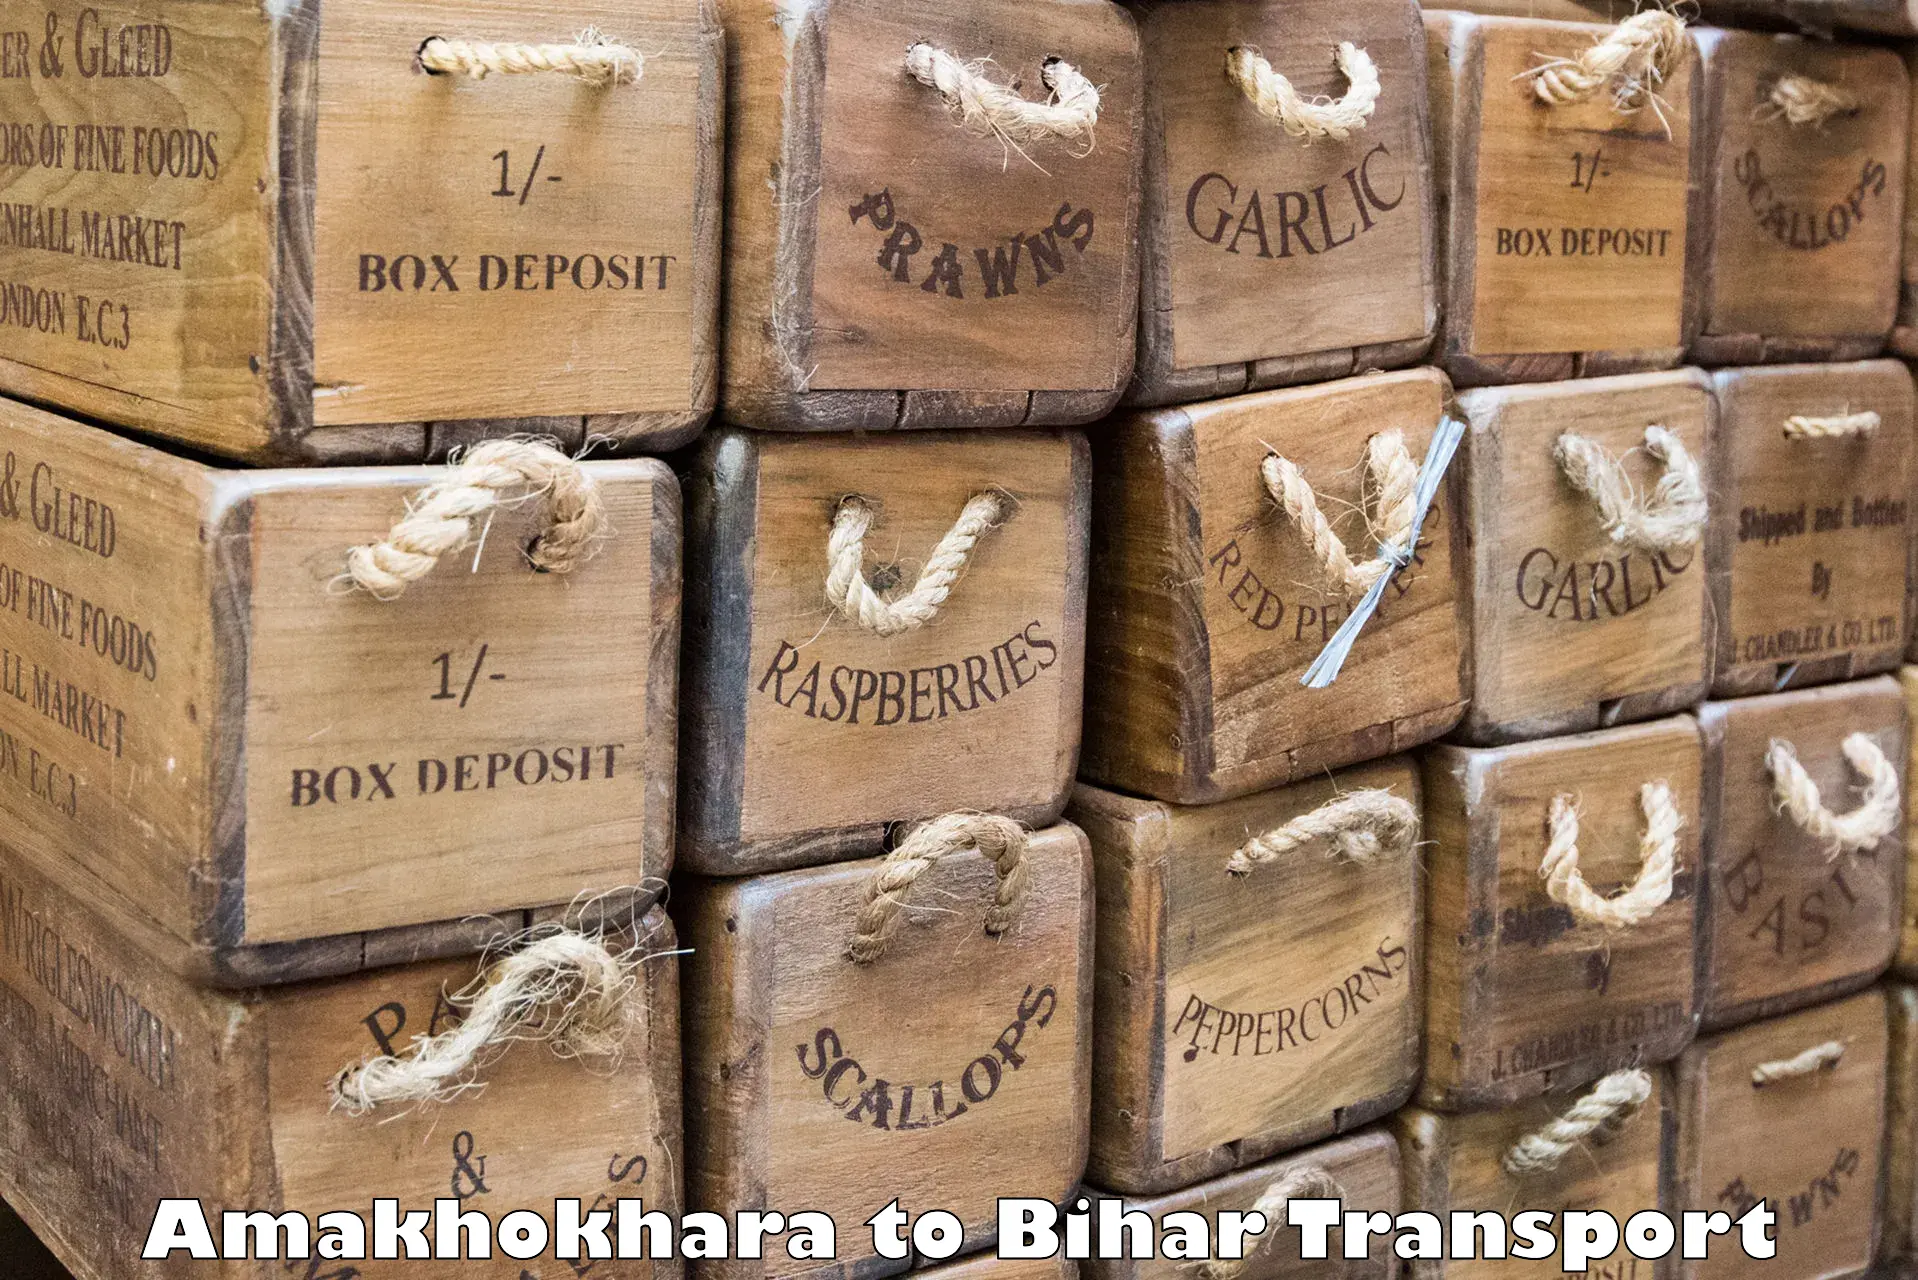 Truck transport companies in India Amakhokhara to Chakai